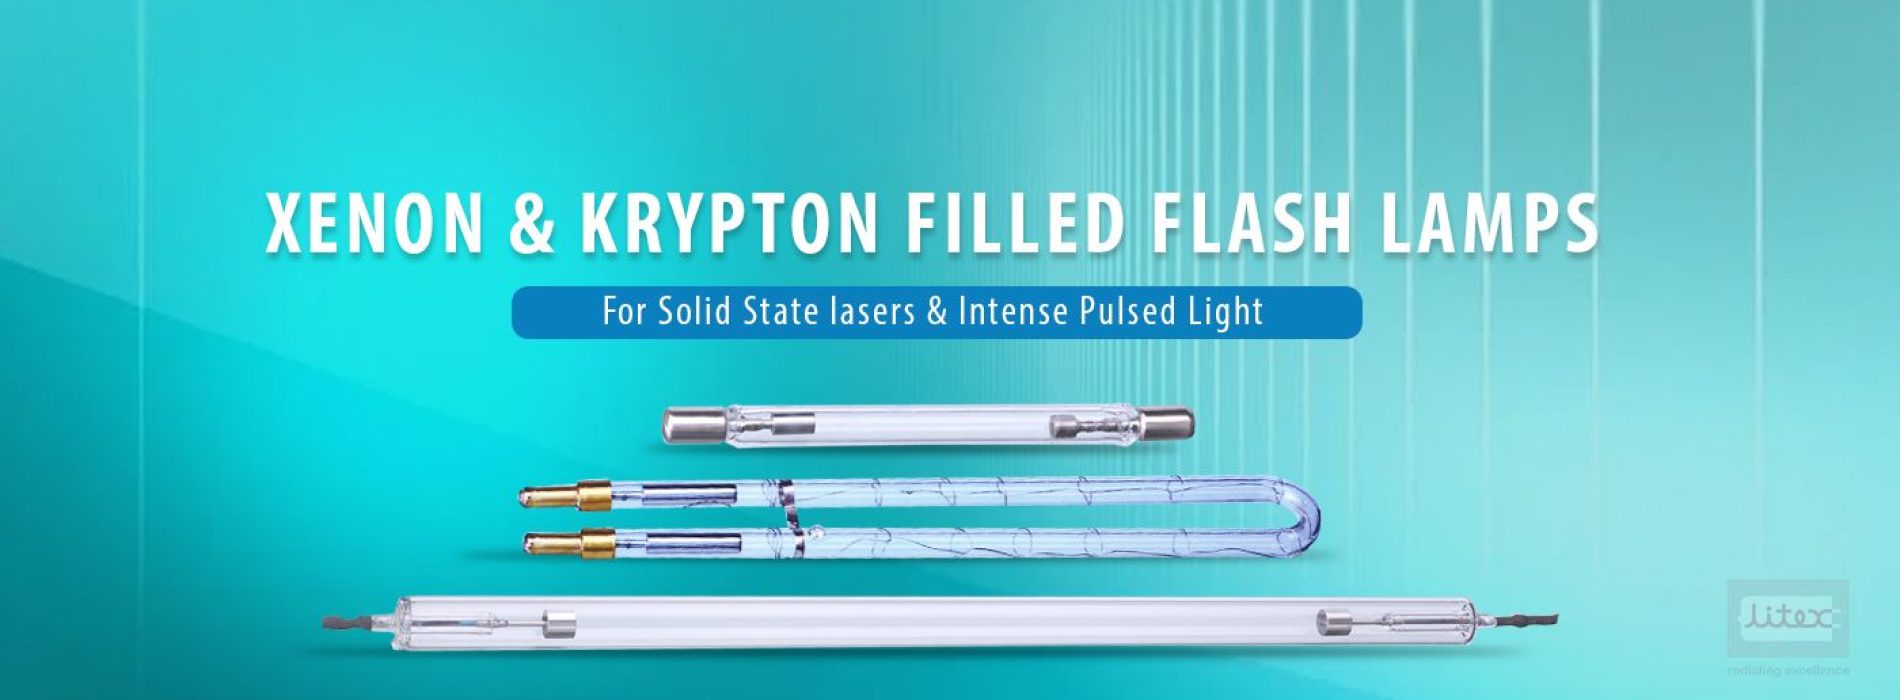 Xenon & krypton filled flash lamps Pune